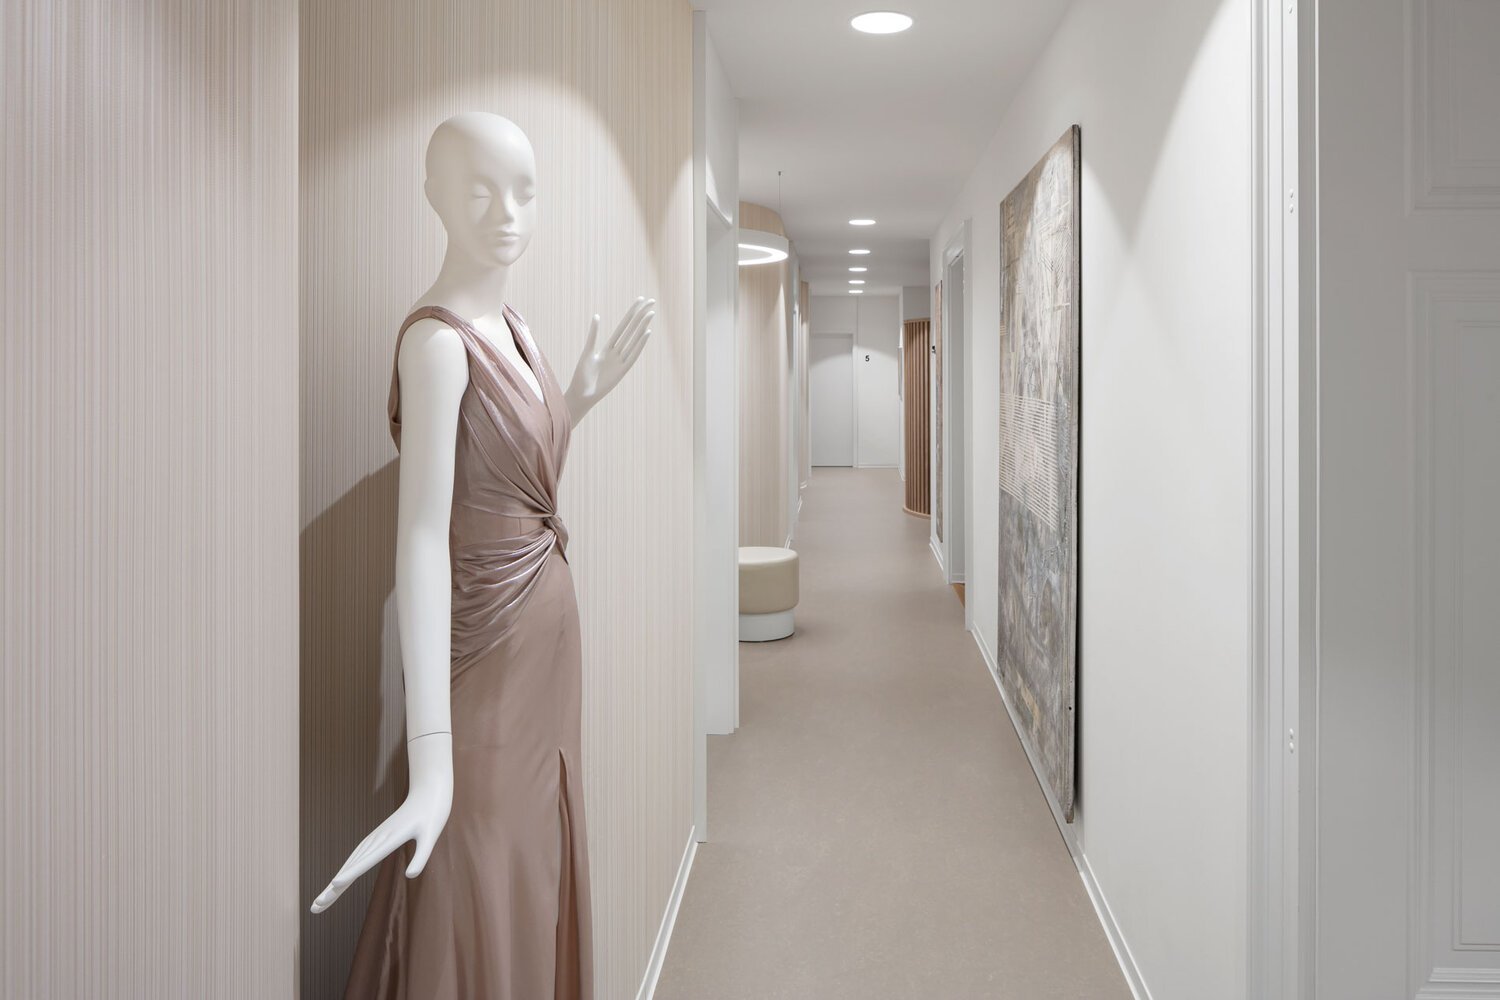 interior photo for rp clinic prague design by ujfalusi jiri lizler architzecture photogarpher.JPG